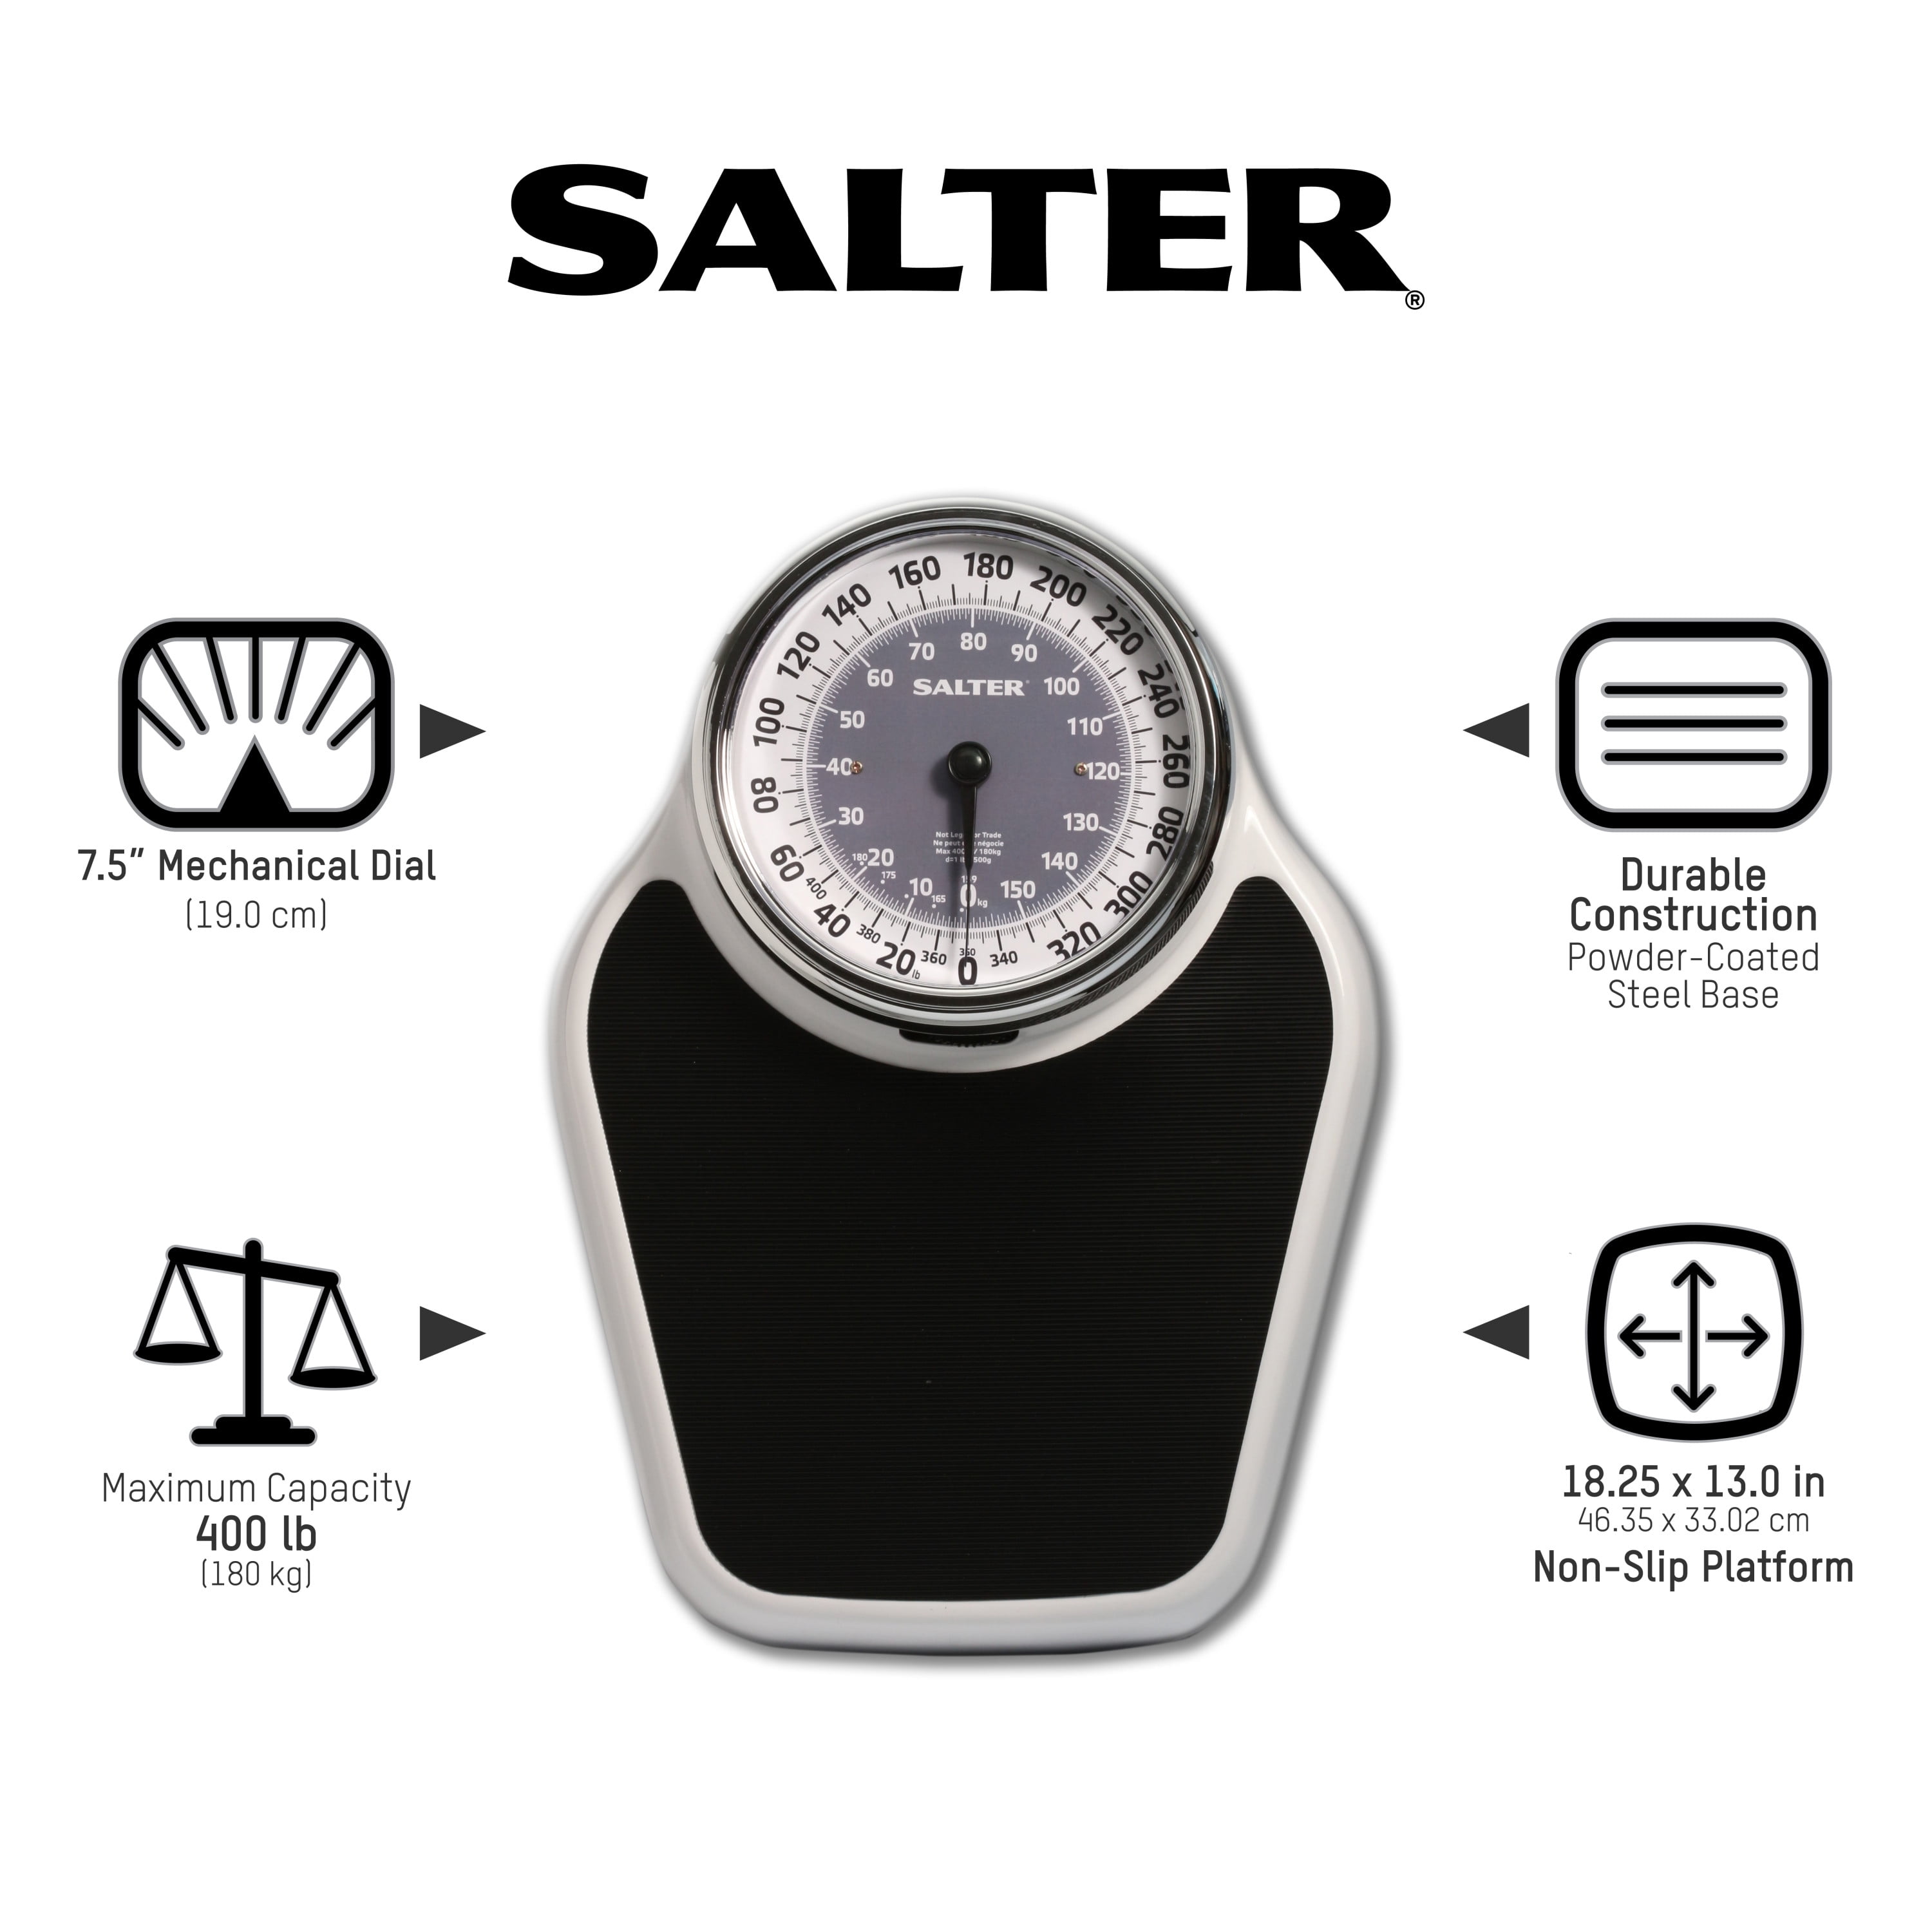 Salter Professional Analog 400lb Capacity Bathroom Scale/Black/Red